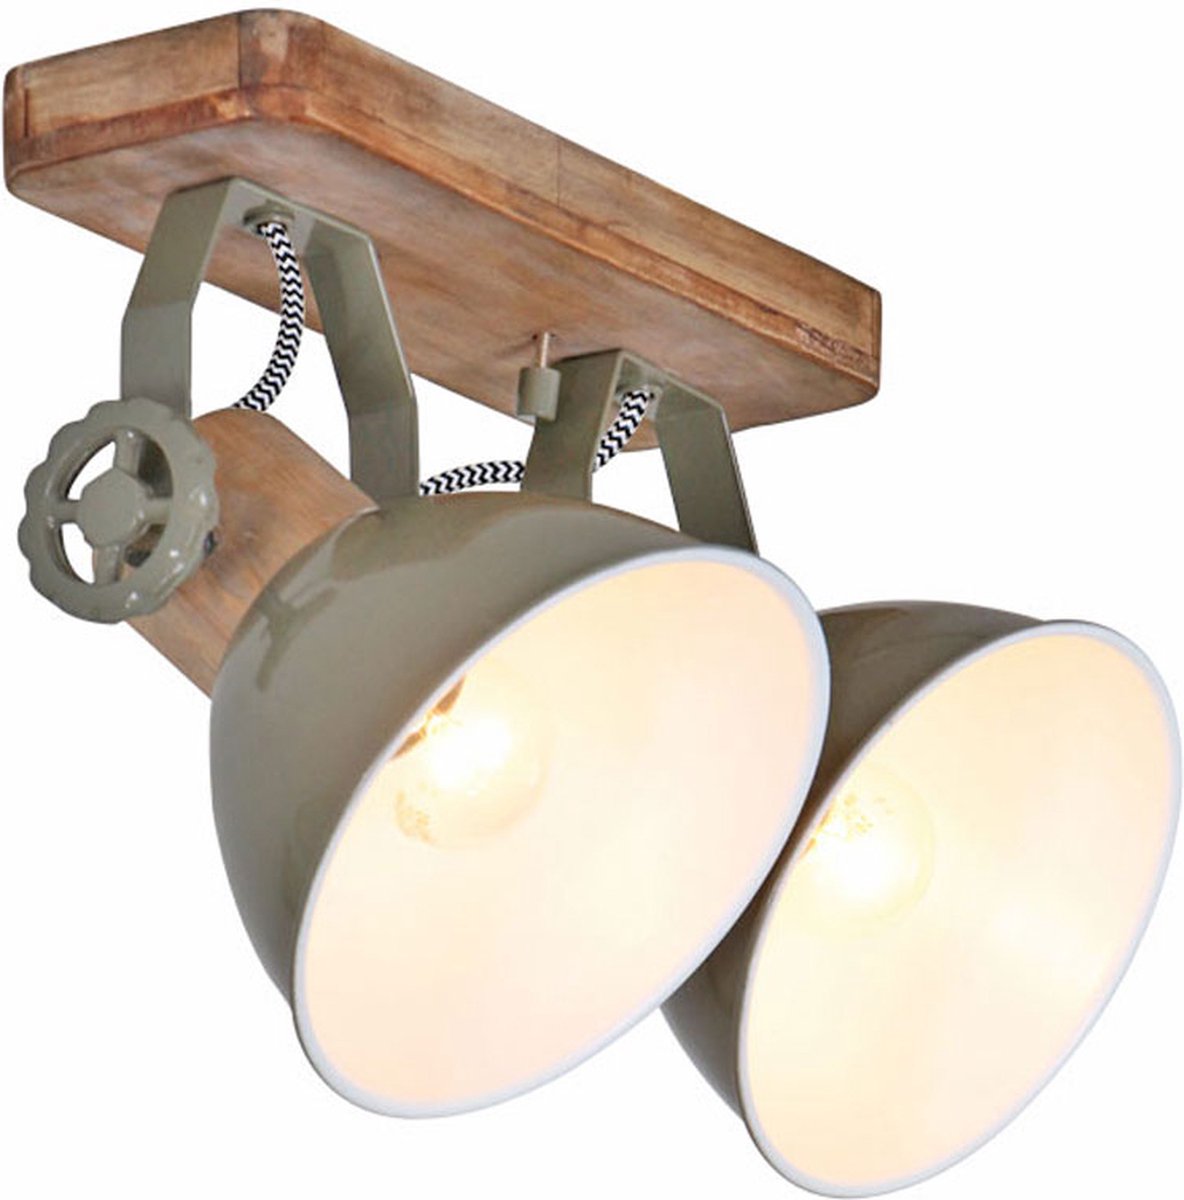 Spot Gearwood | 2 lichts | 27 cm | groen / bruin | hout / metaal | plafondlamp / woonkamer lamp | warm / sfeervol licht | modern / industrieel design